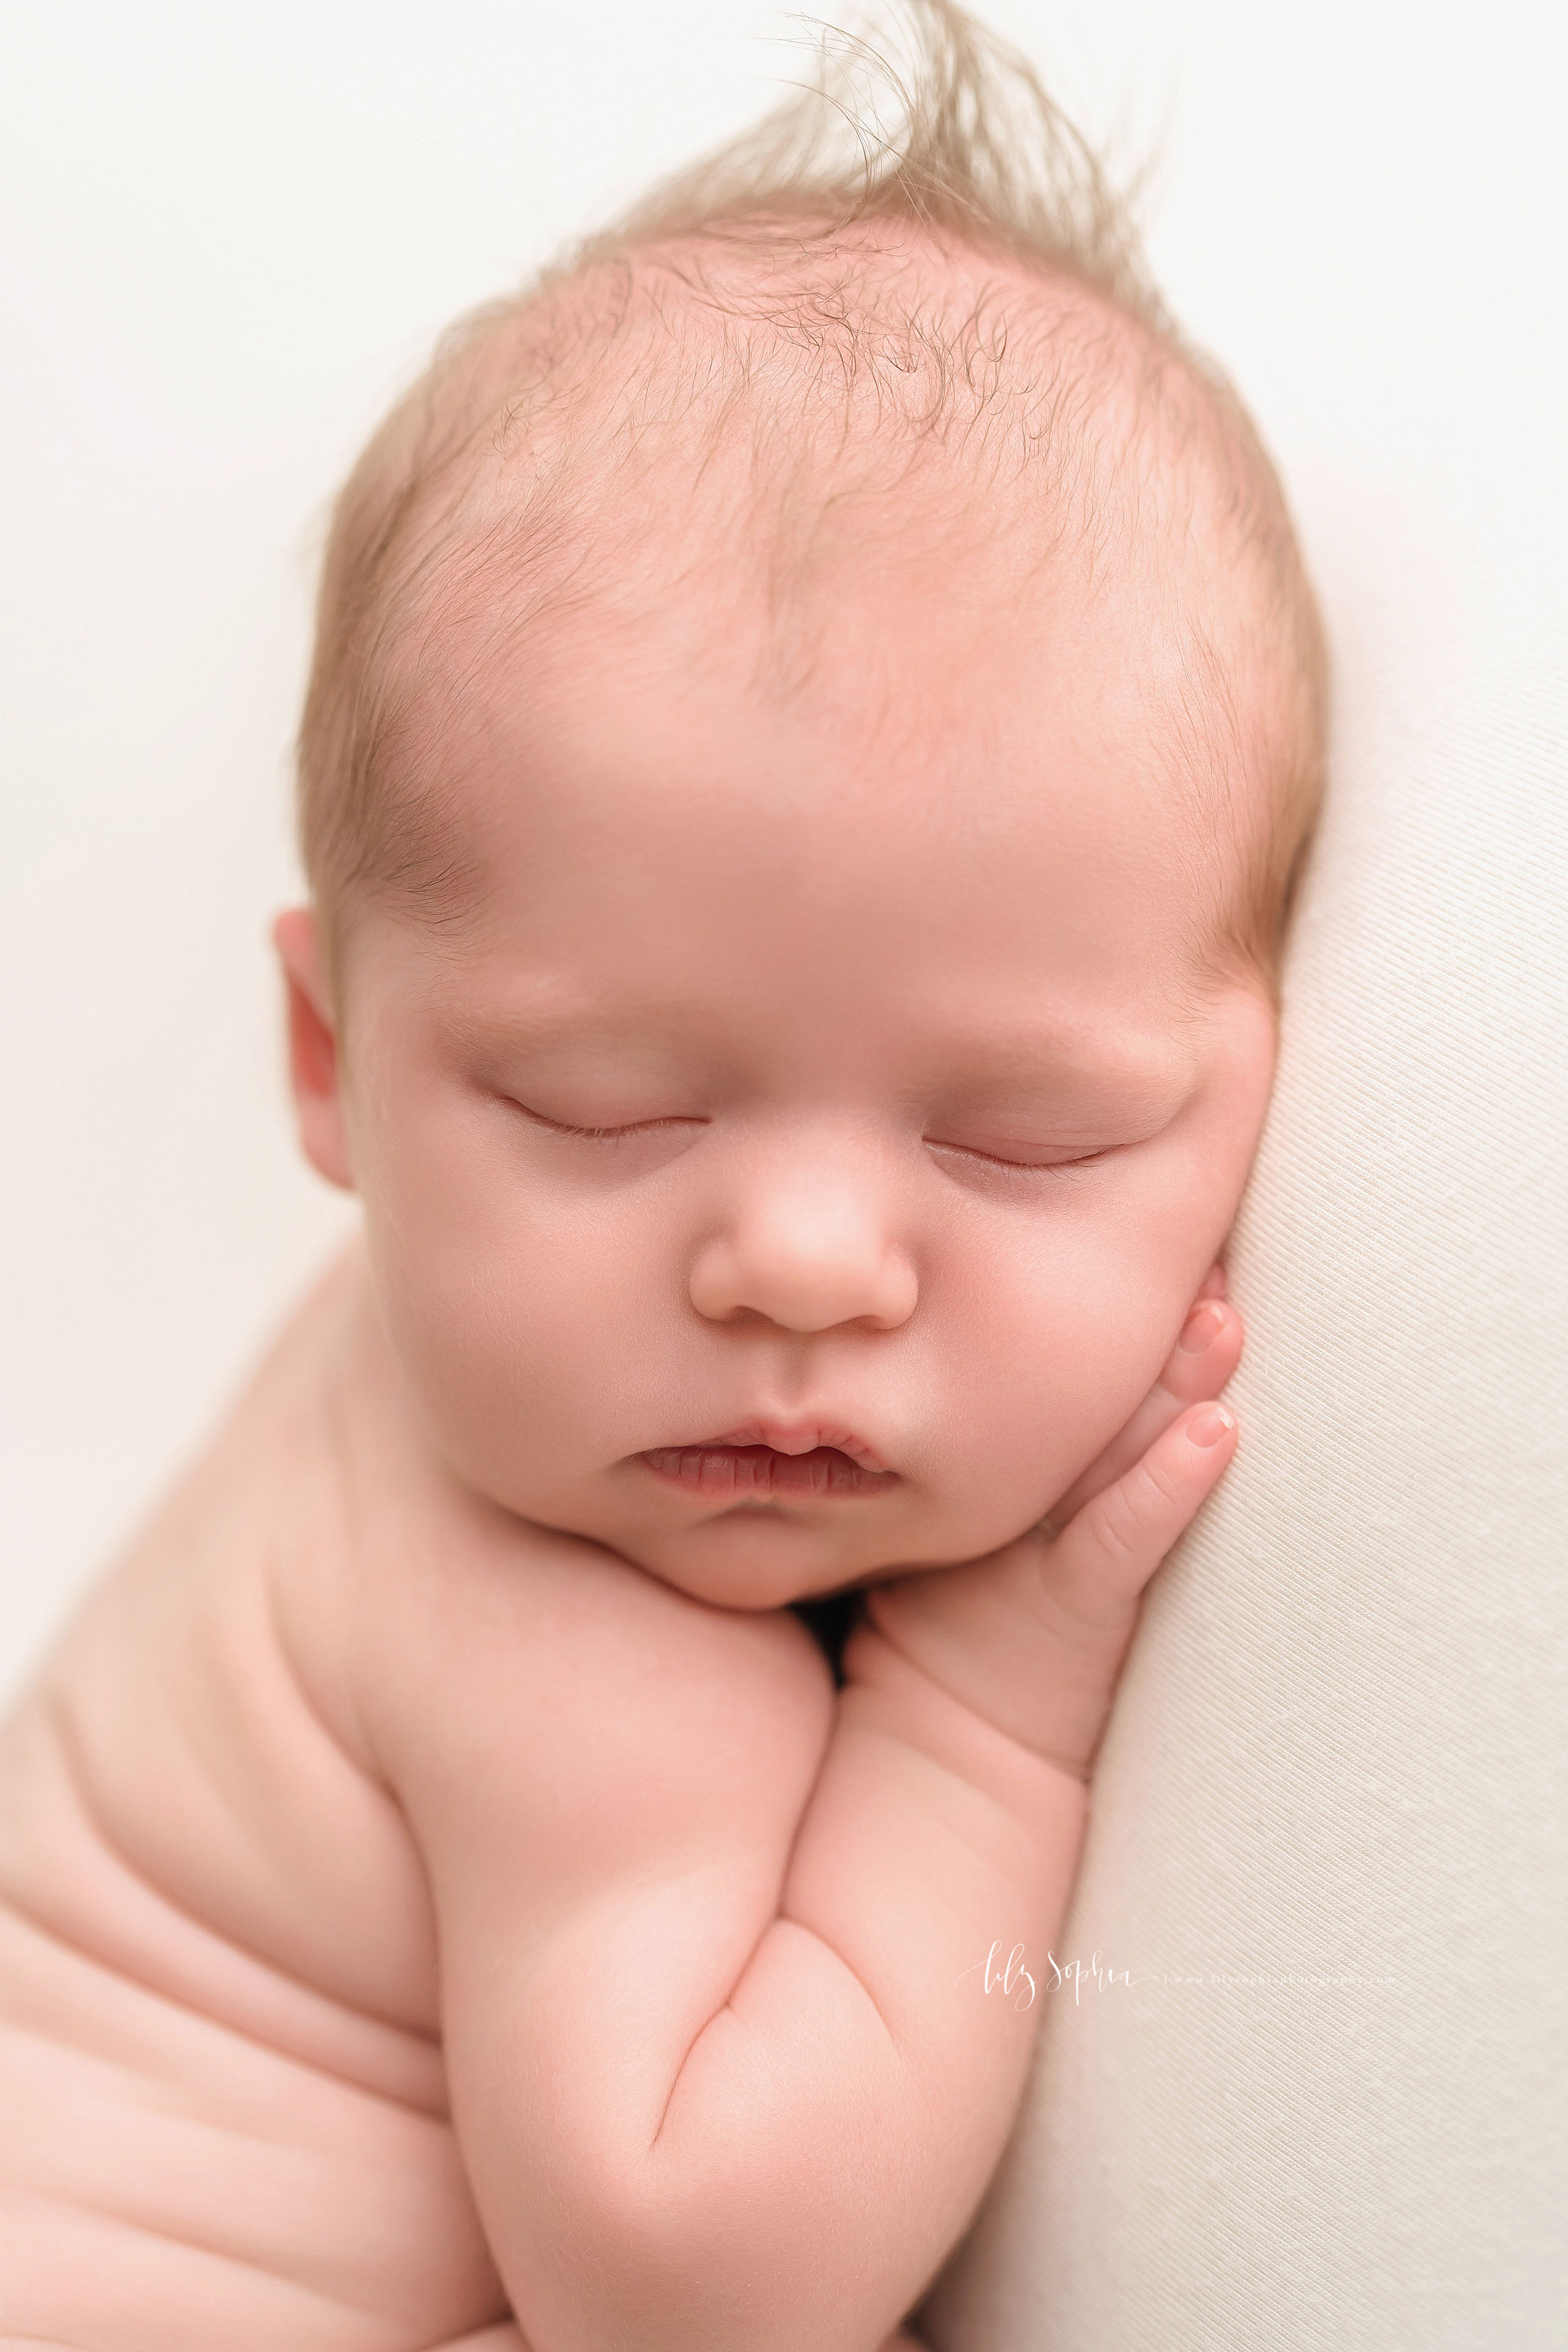  Precious close-up photo of a peacefully sleeping newborn baby girl taken in natural light in an Atlanta studio. 